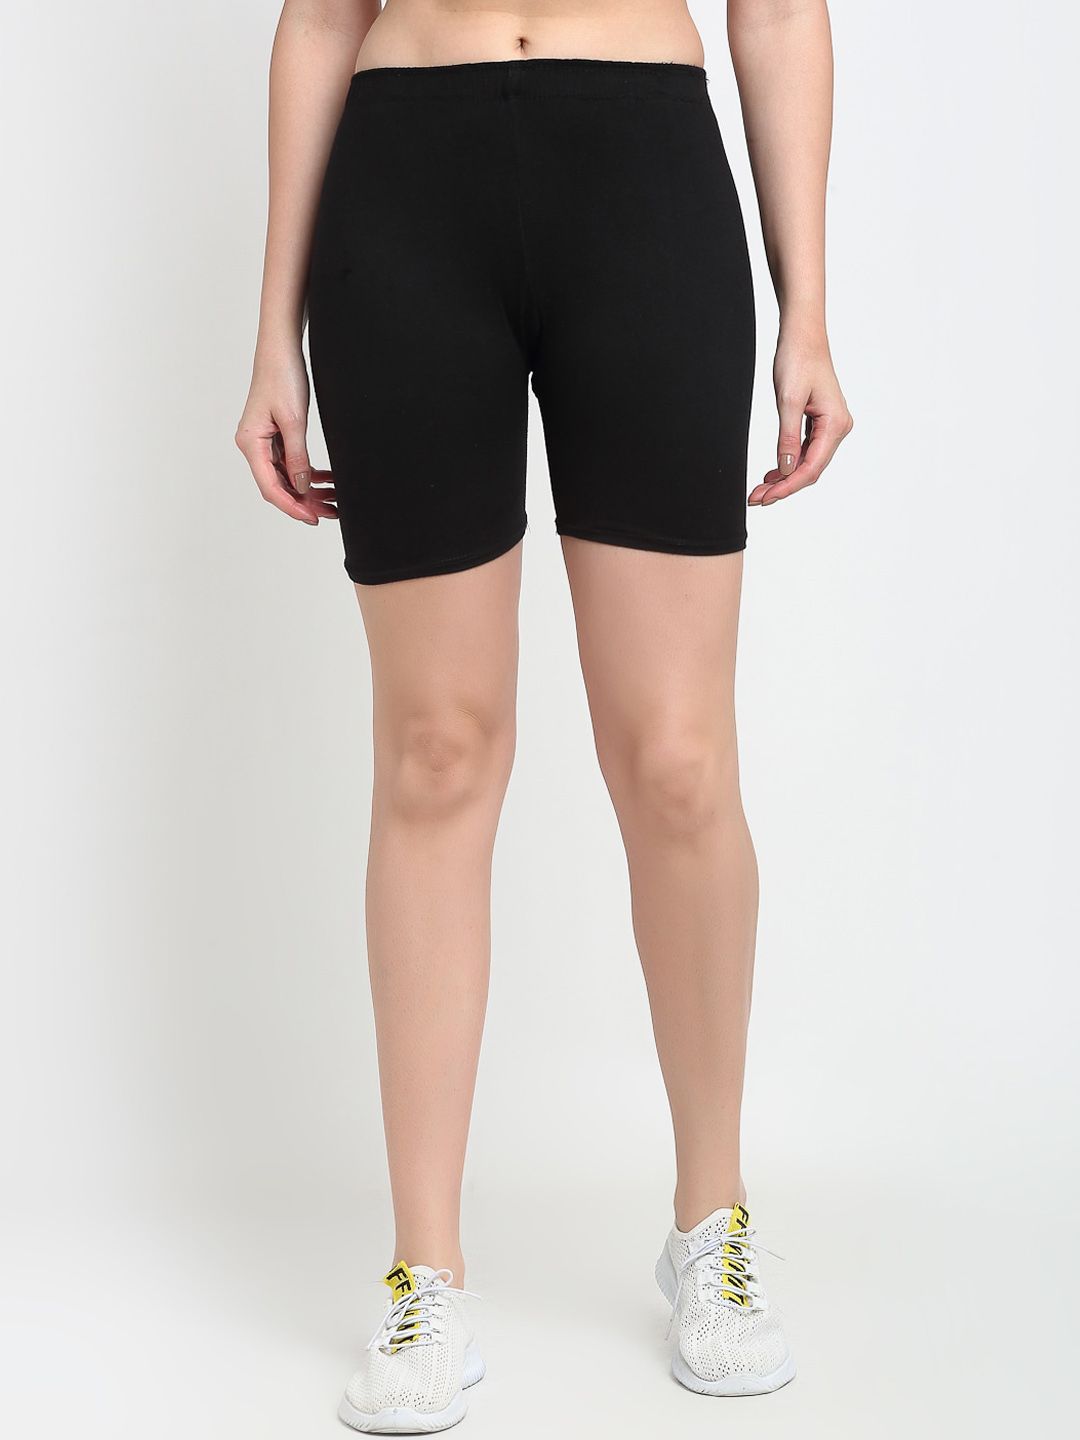 GRACIT Women Black Solid Biker Shorts Price in India